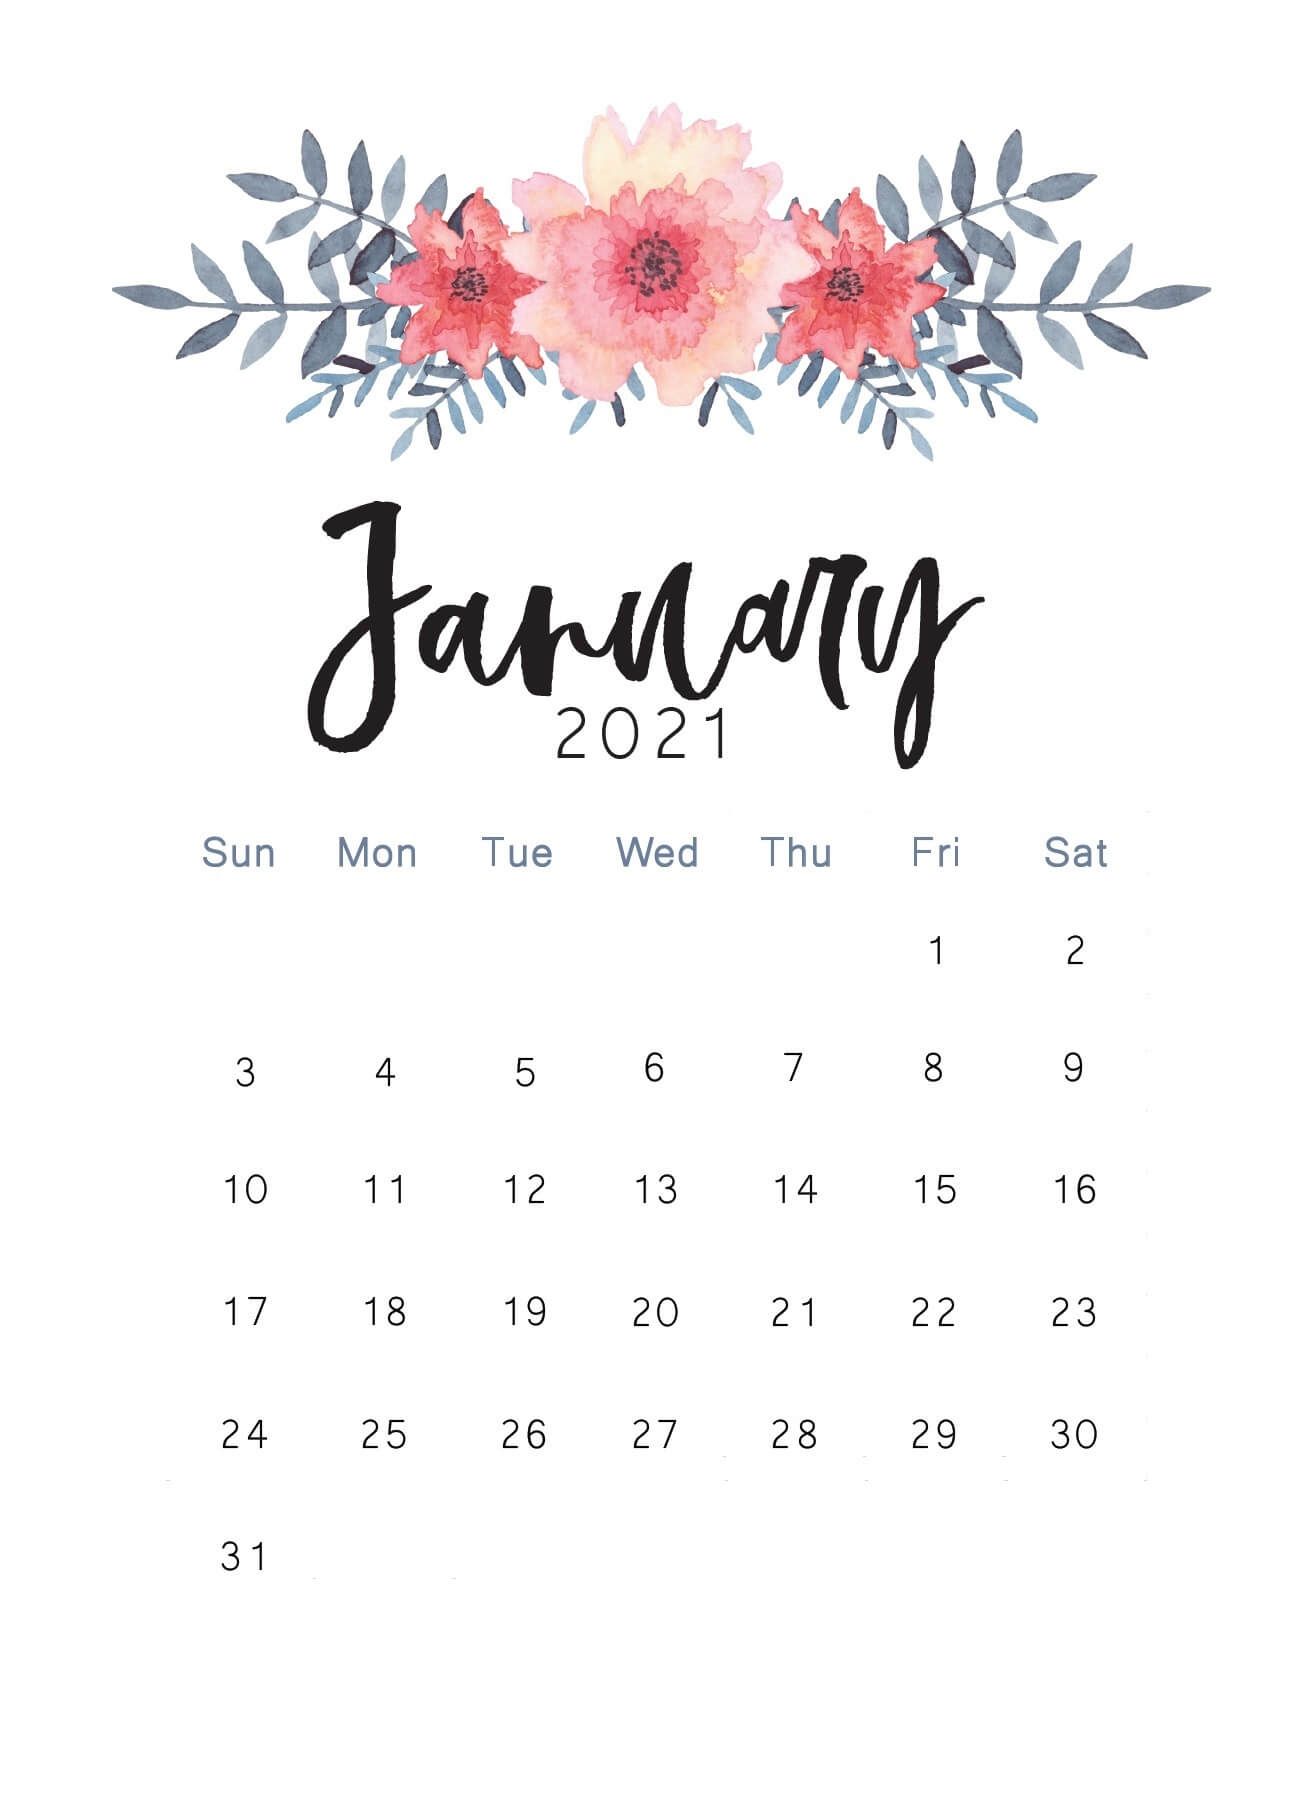 January 2021 Wallpaper For Desktop Image ID 10